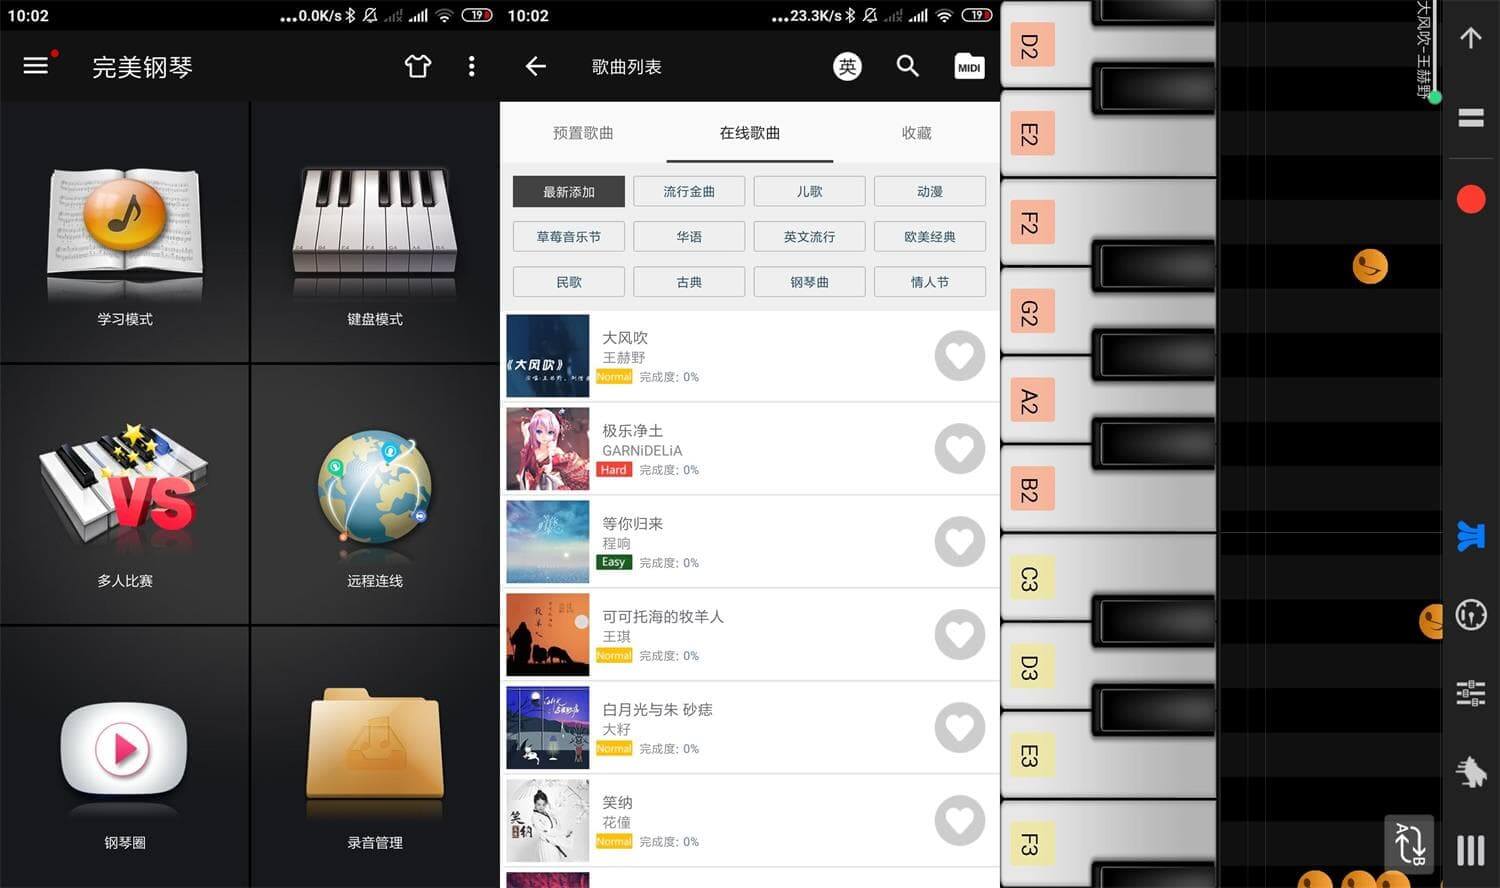 Android 完美钢琴 7.5.0 钢琴模拟器去广告VIP版-无痕哥's Blog